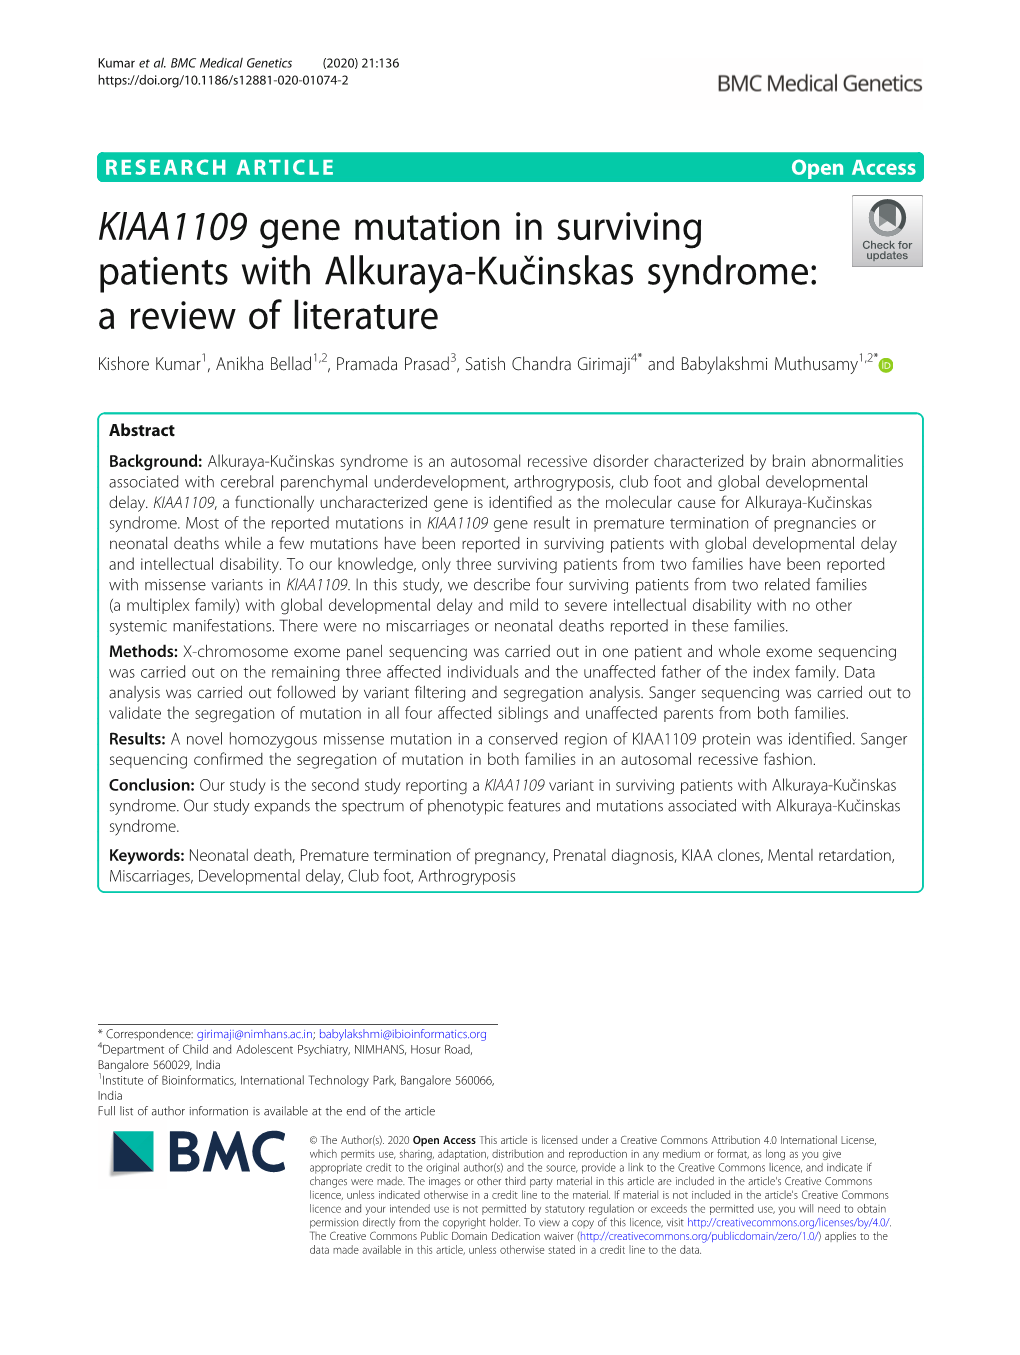 KIAA1109 Gene Mutation in Surviving Patients